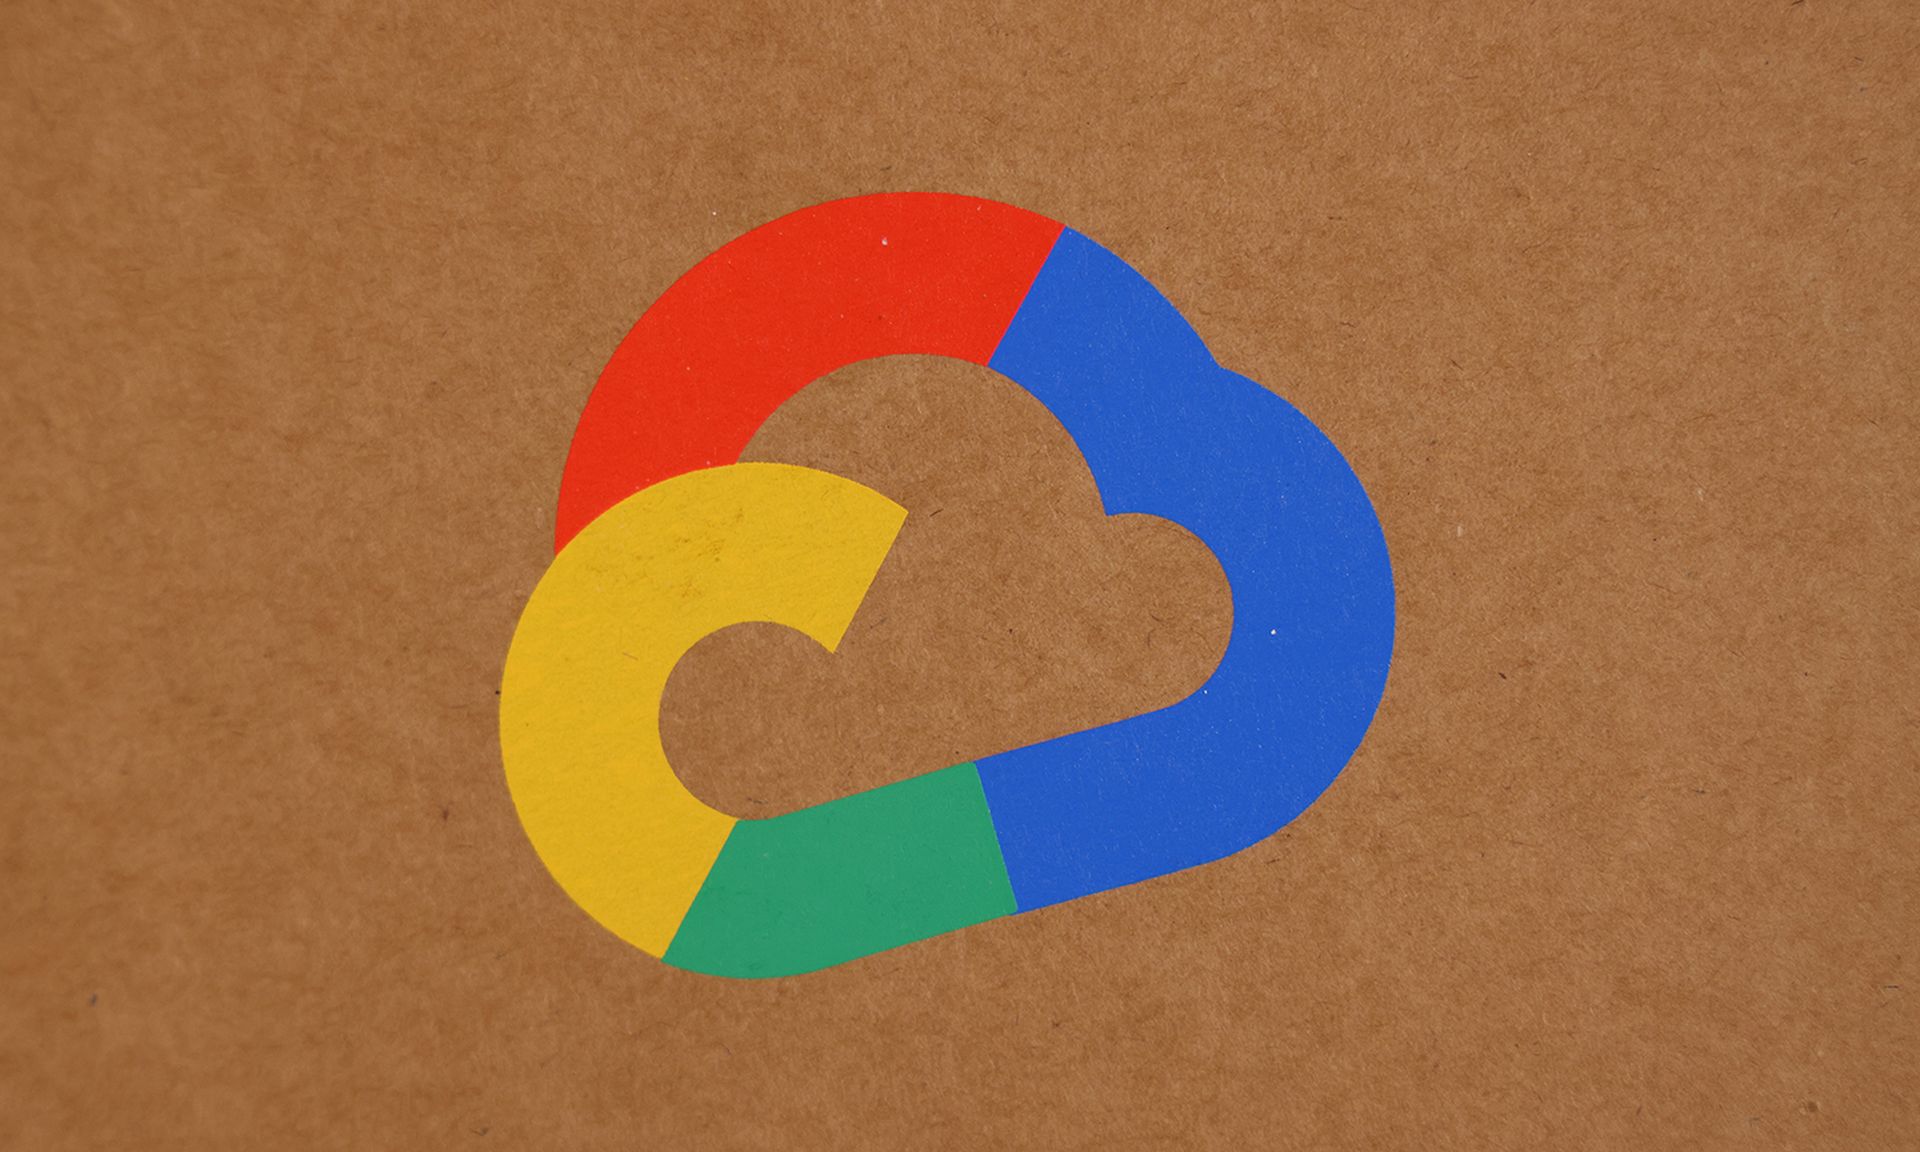 The Google Cloud logo is seen on a notebook.